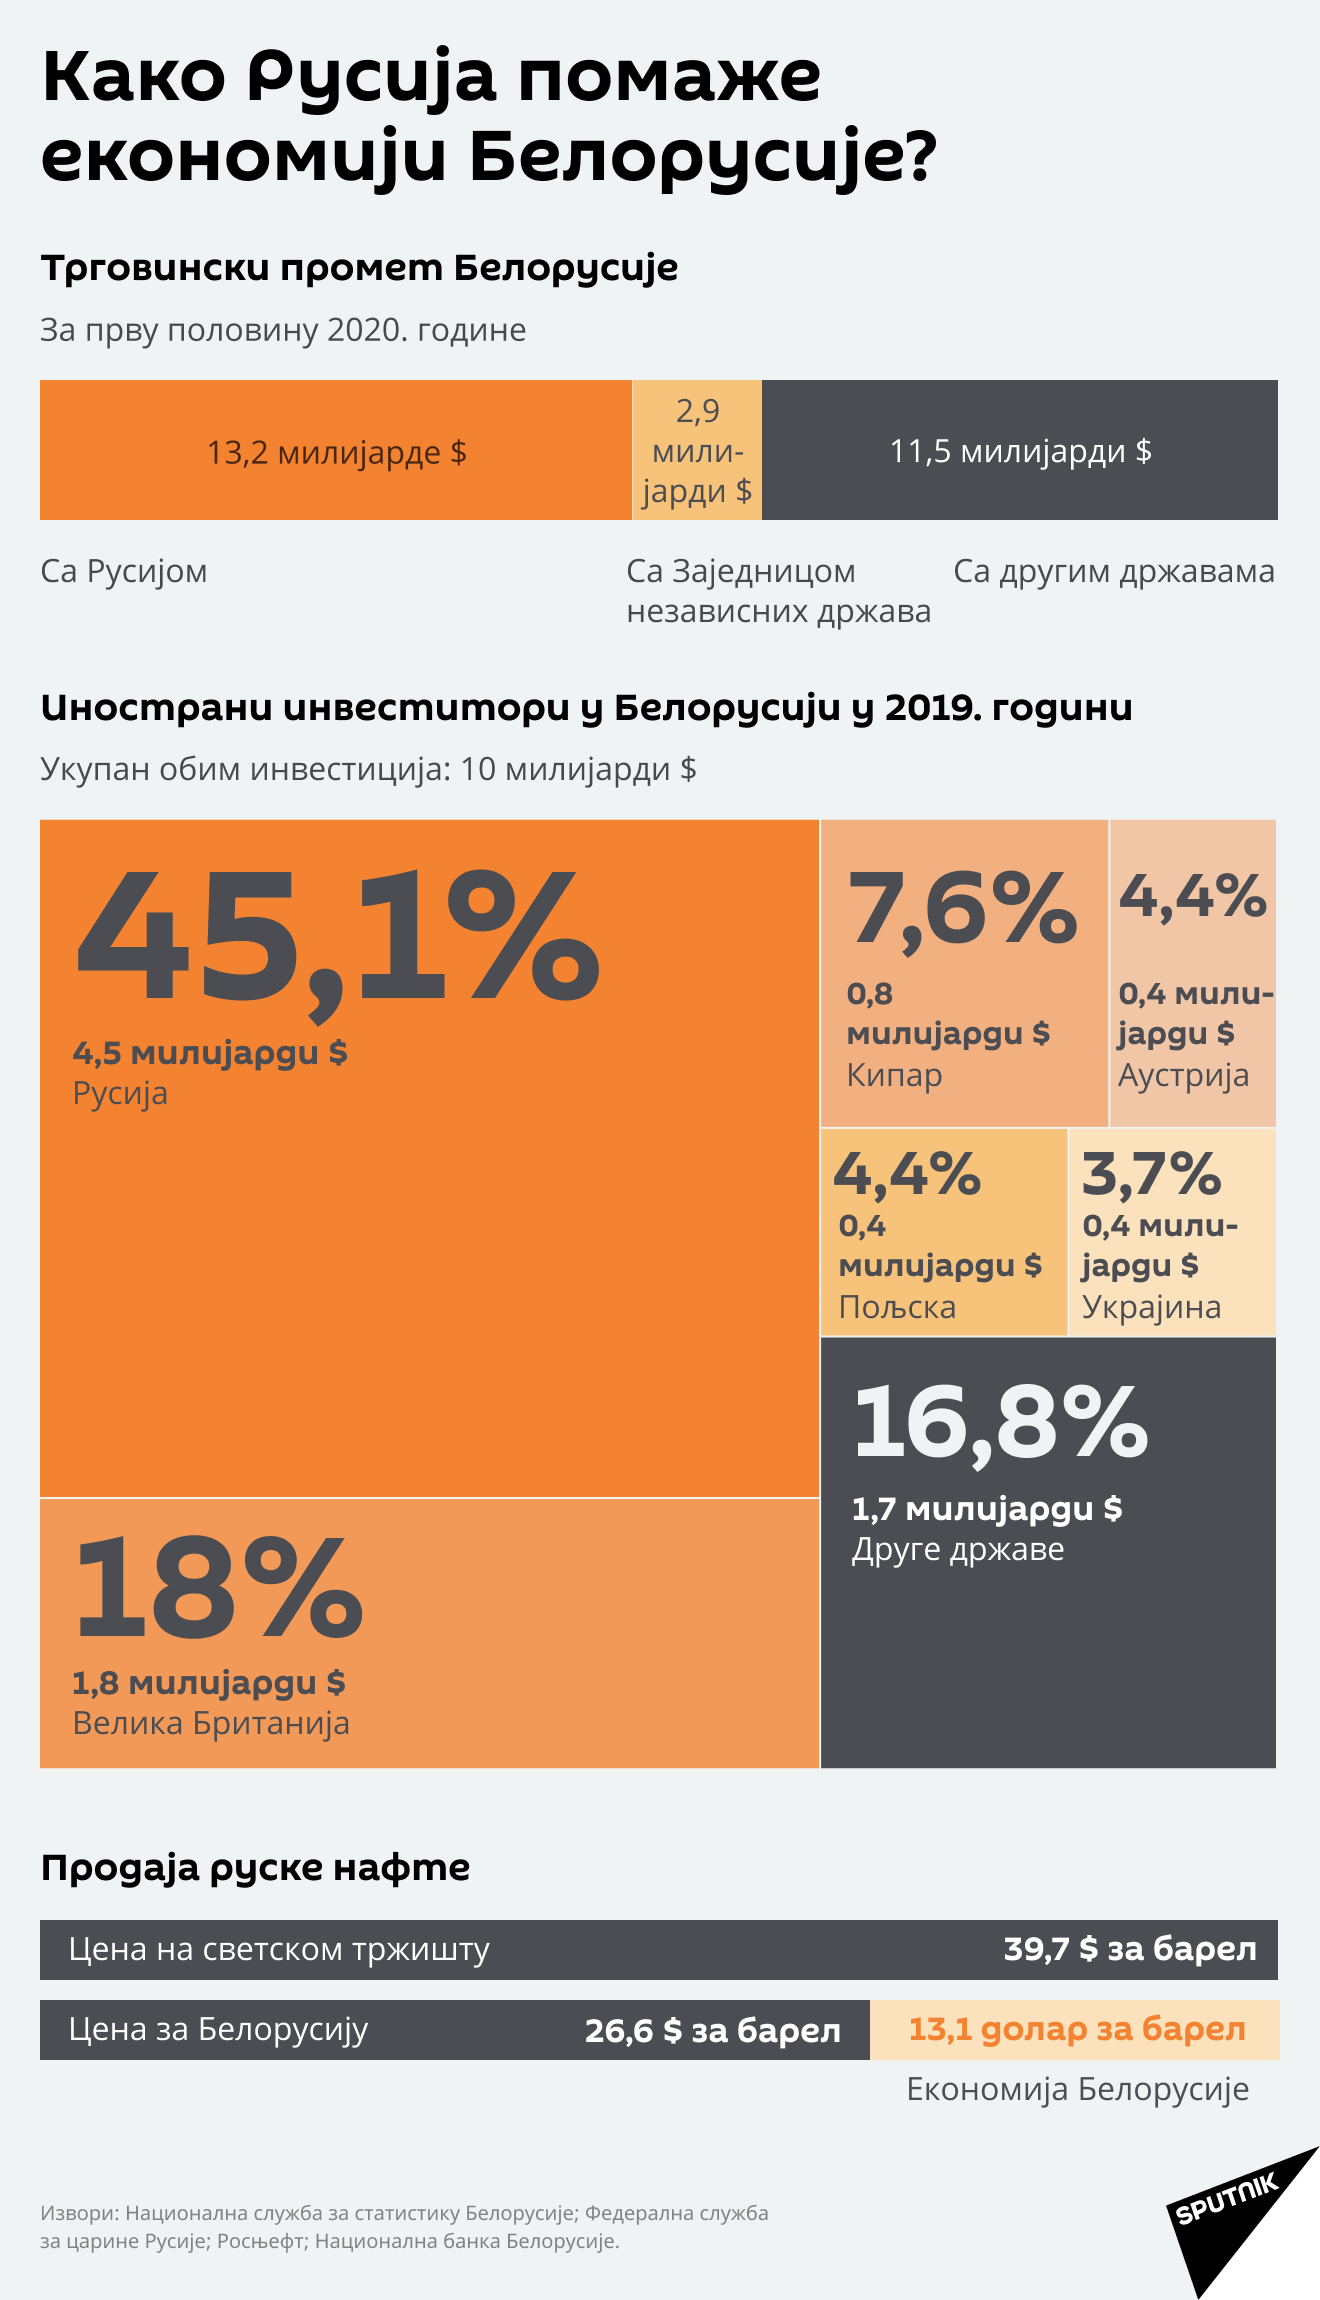 Како Русија помаже економији Белорусије? - Sputnik Србија